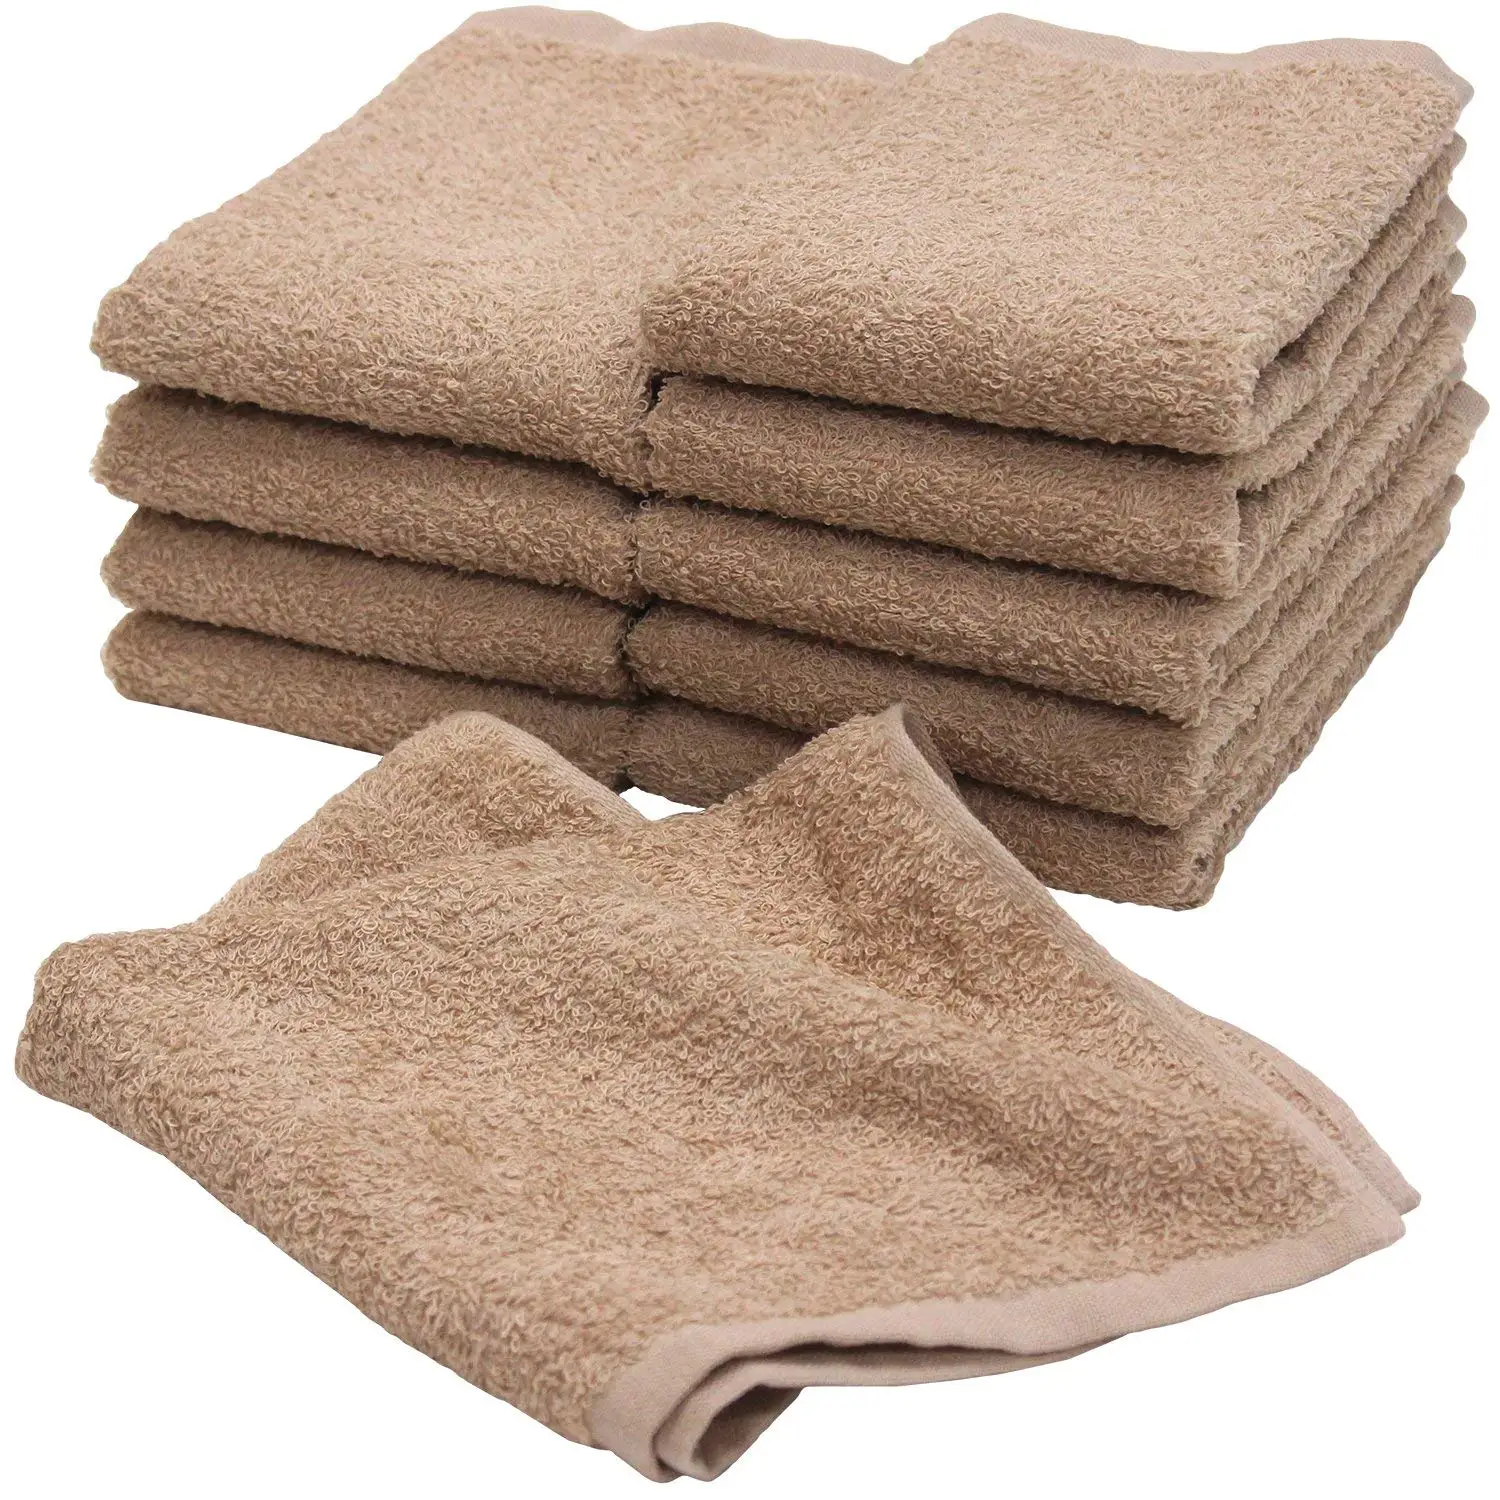 Коричневое полотенце. Полотенце (светло-коричневый). Полотенце махровое светло-коричневое. Светлое полотенце.